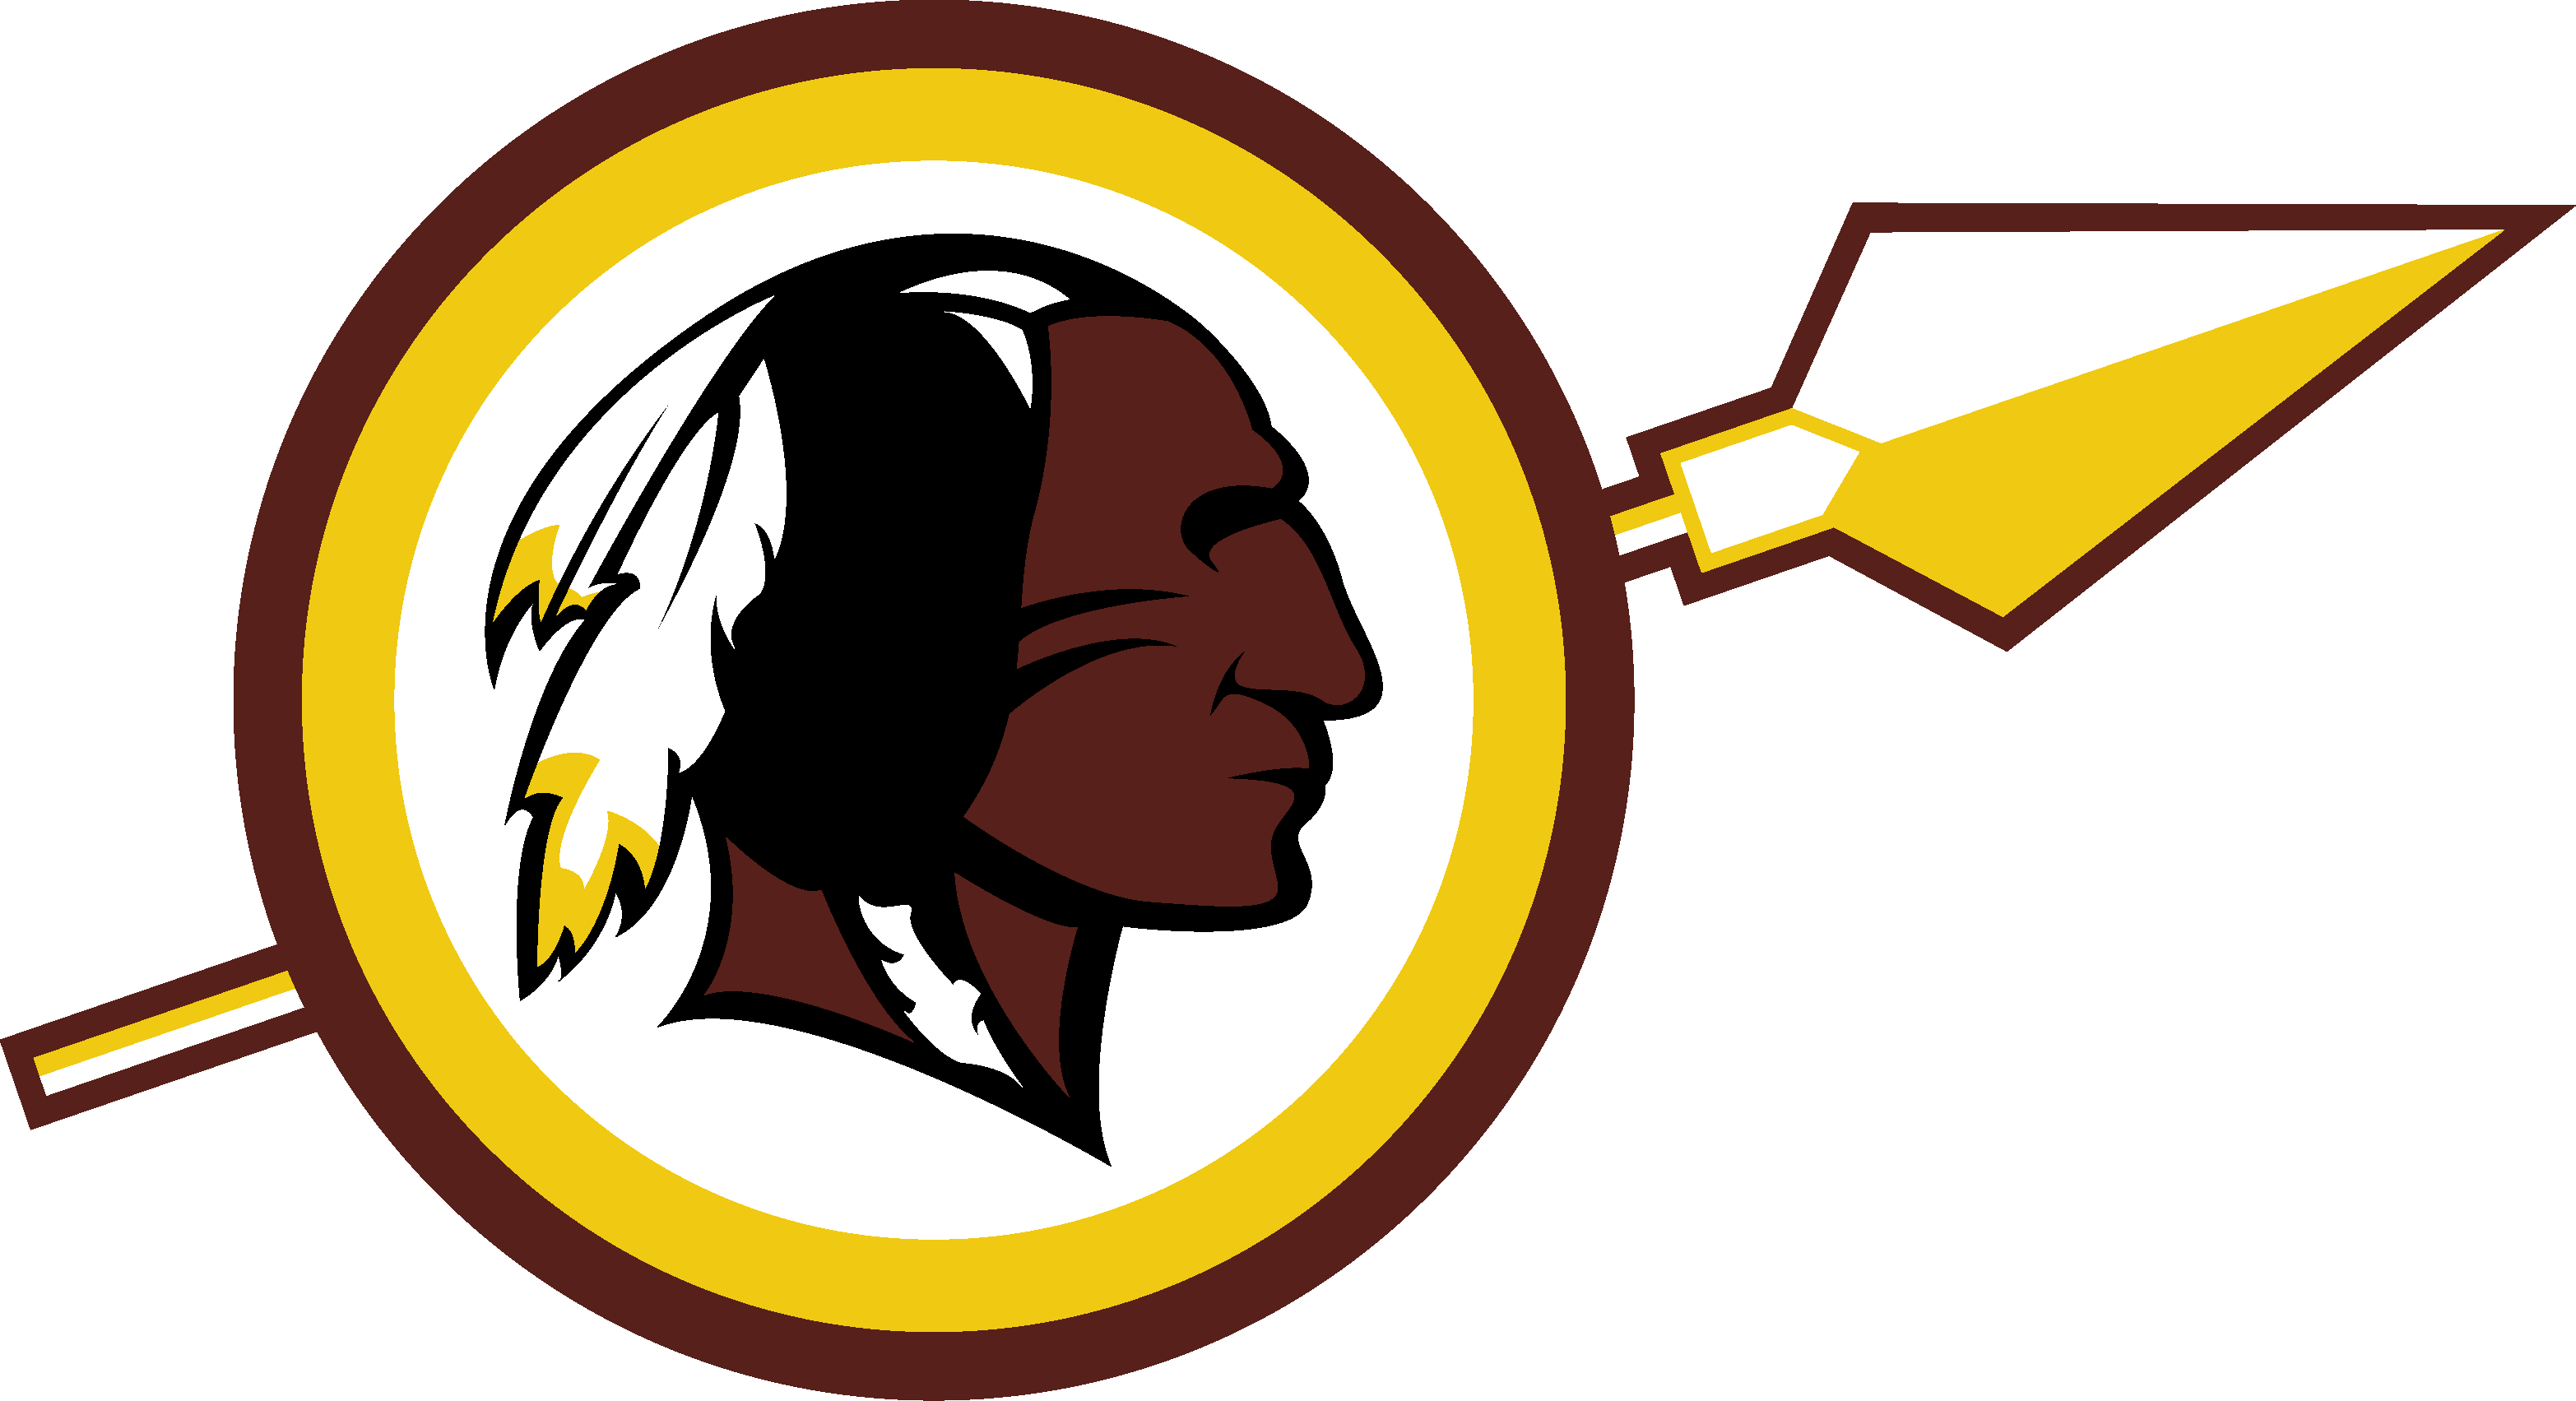 Washington Redskins Logo - New Washington Redskins logo - Concepts - Chris Creamer's Sports ...